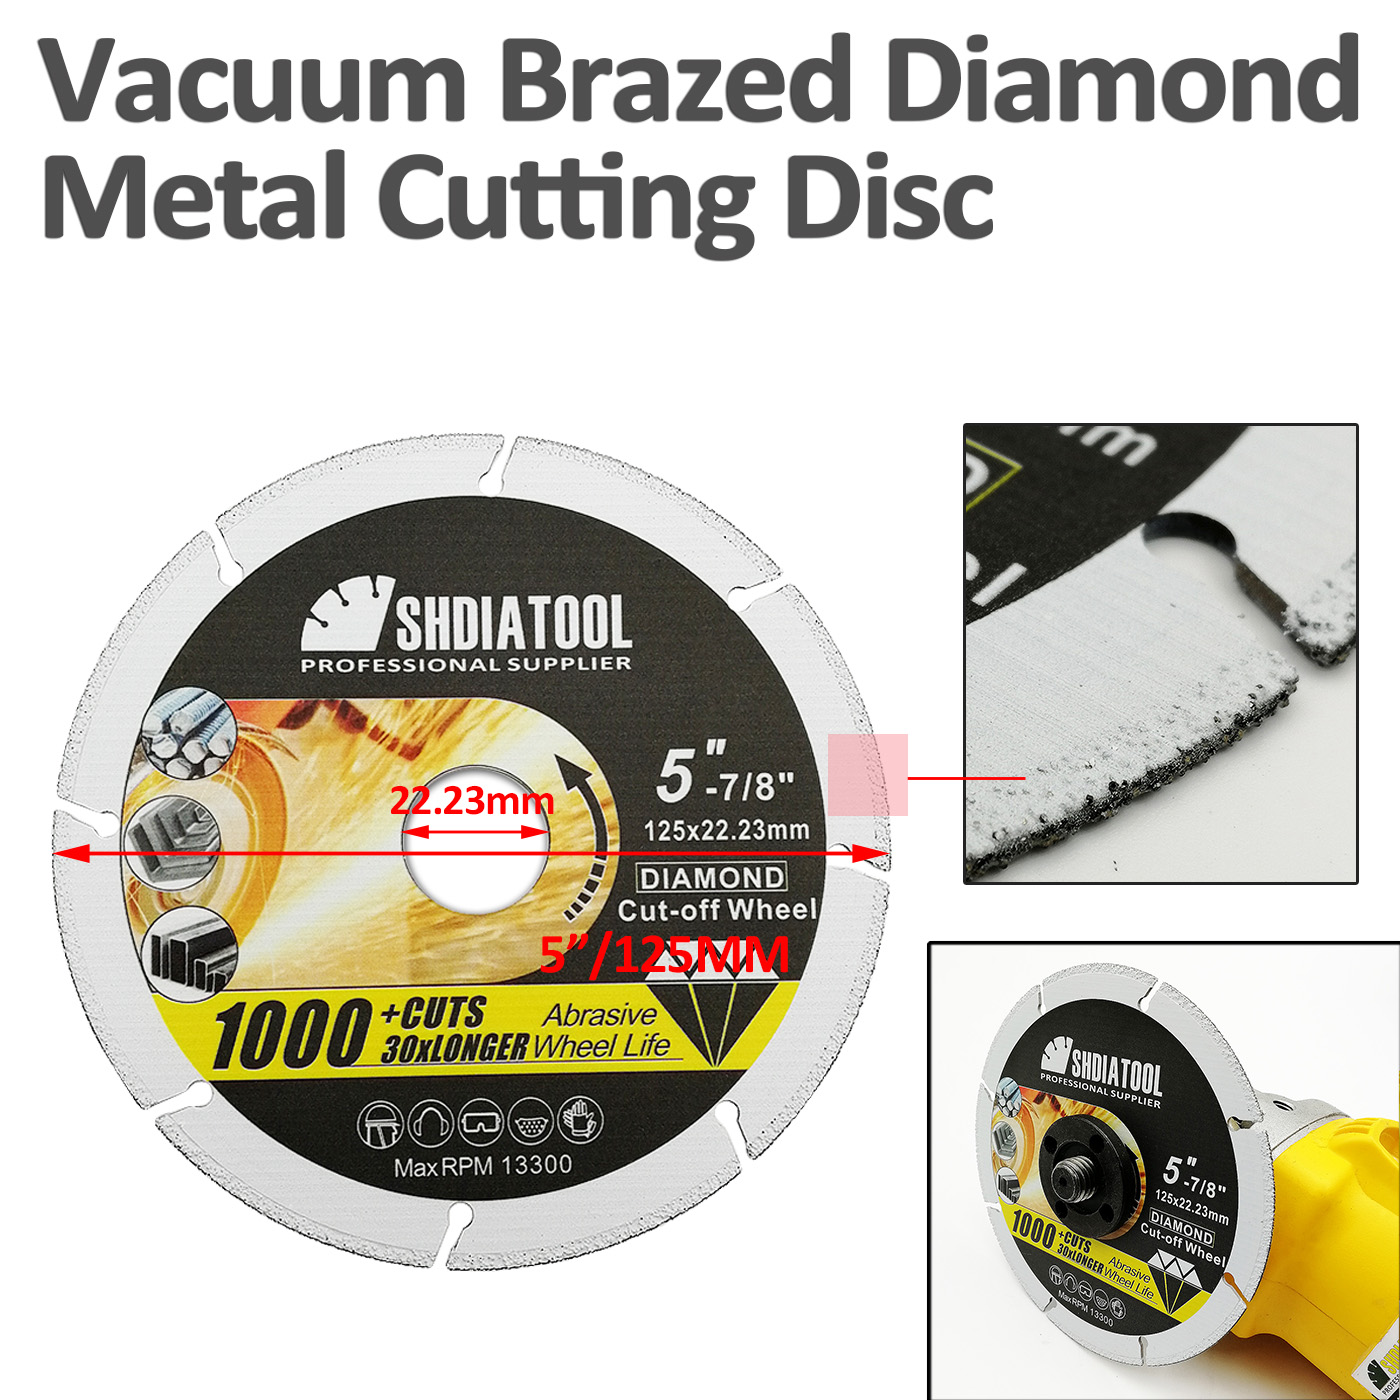 SHDIATOOL 2pcs 5"Diamond Cut-off Wheel Blade Vacuum Brazed Diamond Metal Cutting Disc For Steel Tube, Iron Rebar, Angle Steel